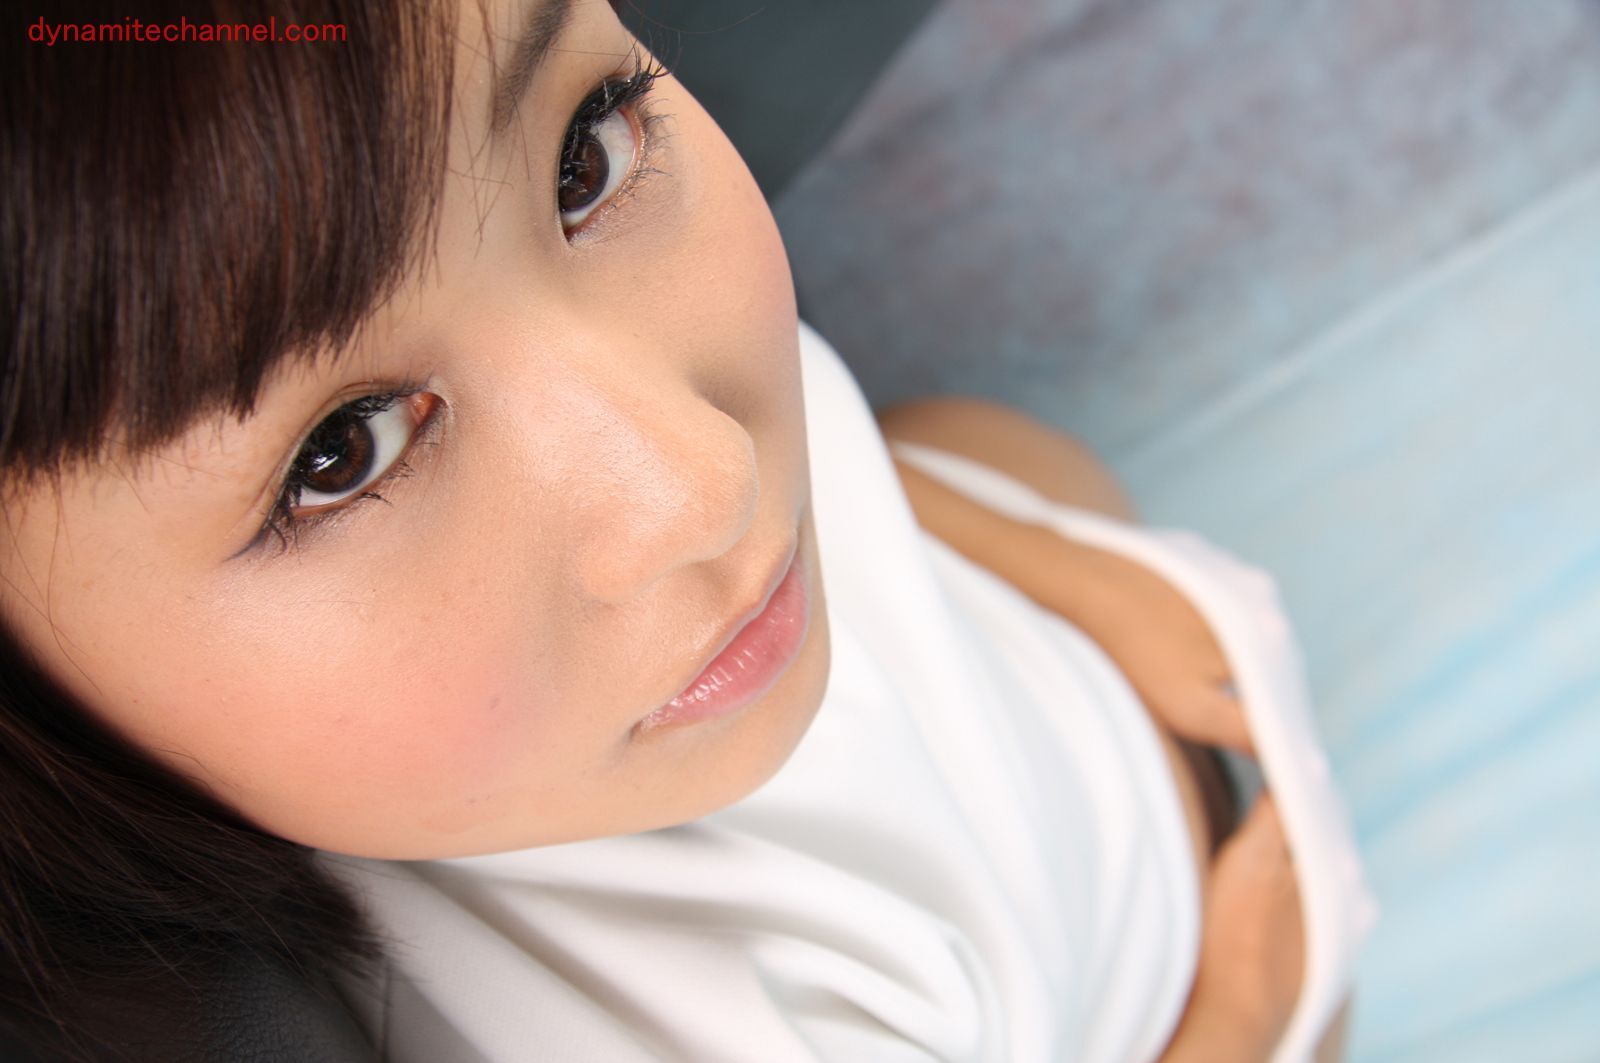 Kyokawa Shinyo (2) dynamic beauty 2011-07-21